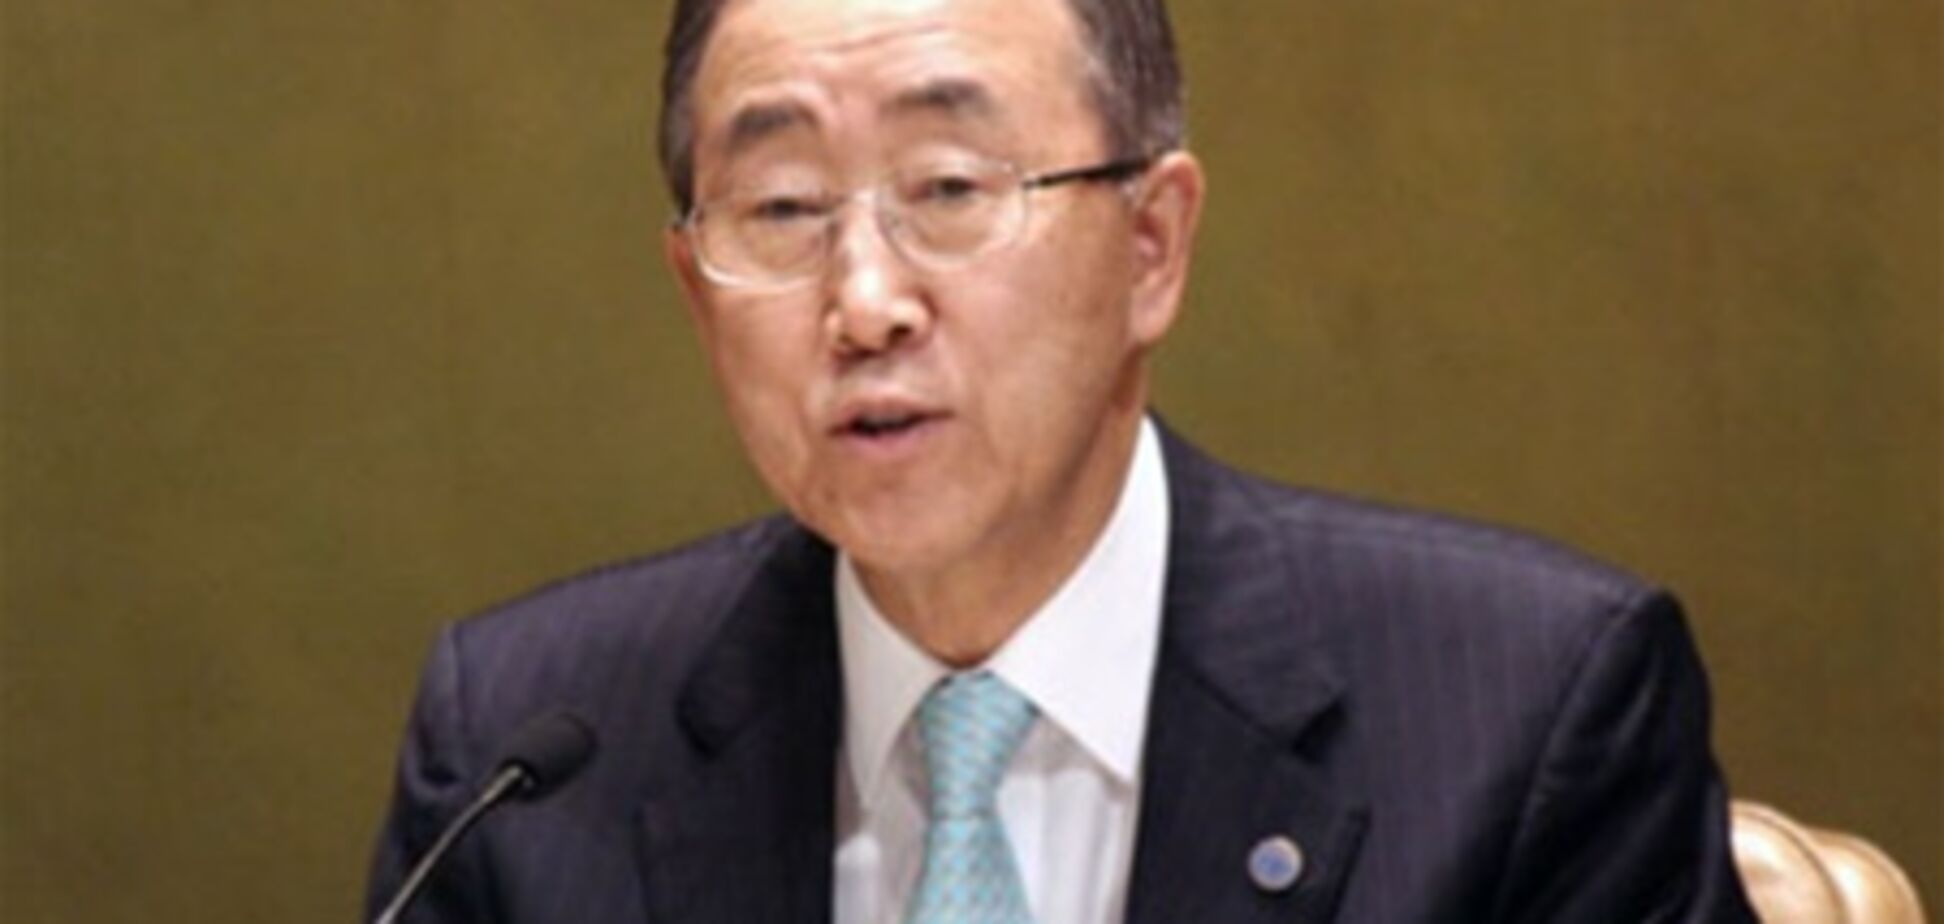 Пан Ги Мун критикует обе стороны сирийского конфликта за эскалацию насилия